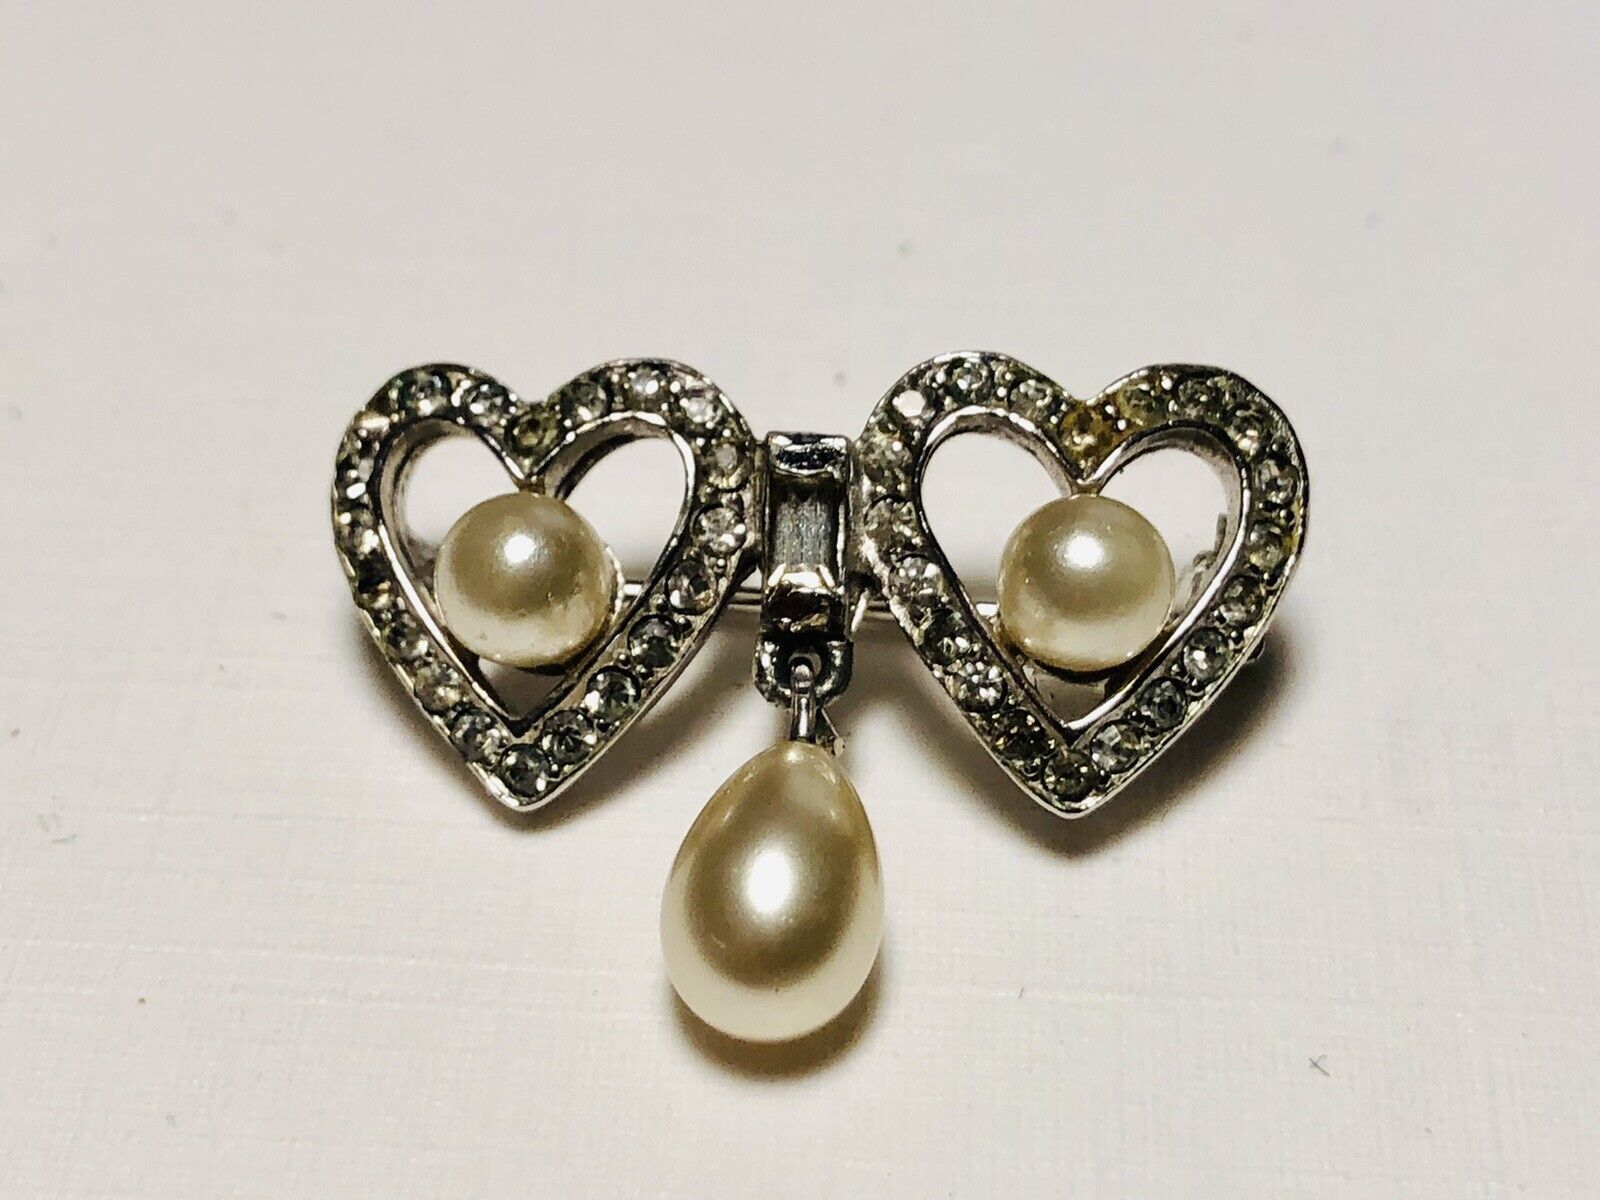 Small vintage double heart Silvertone brooch - image 2